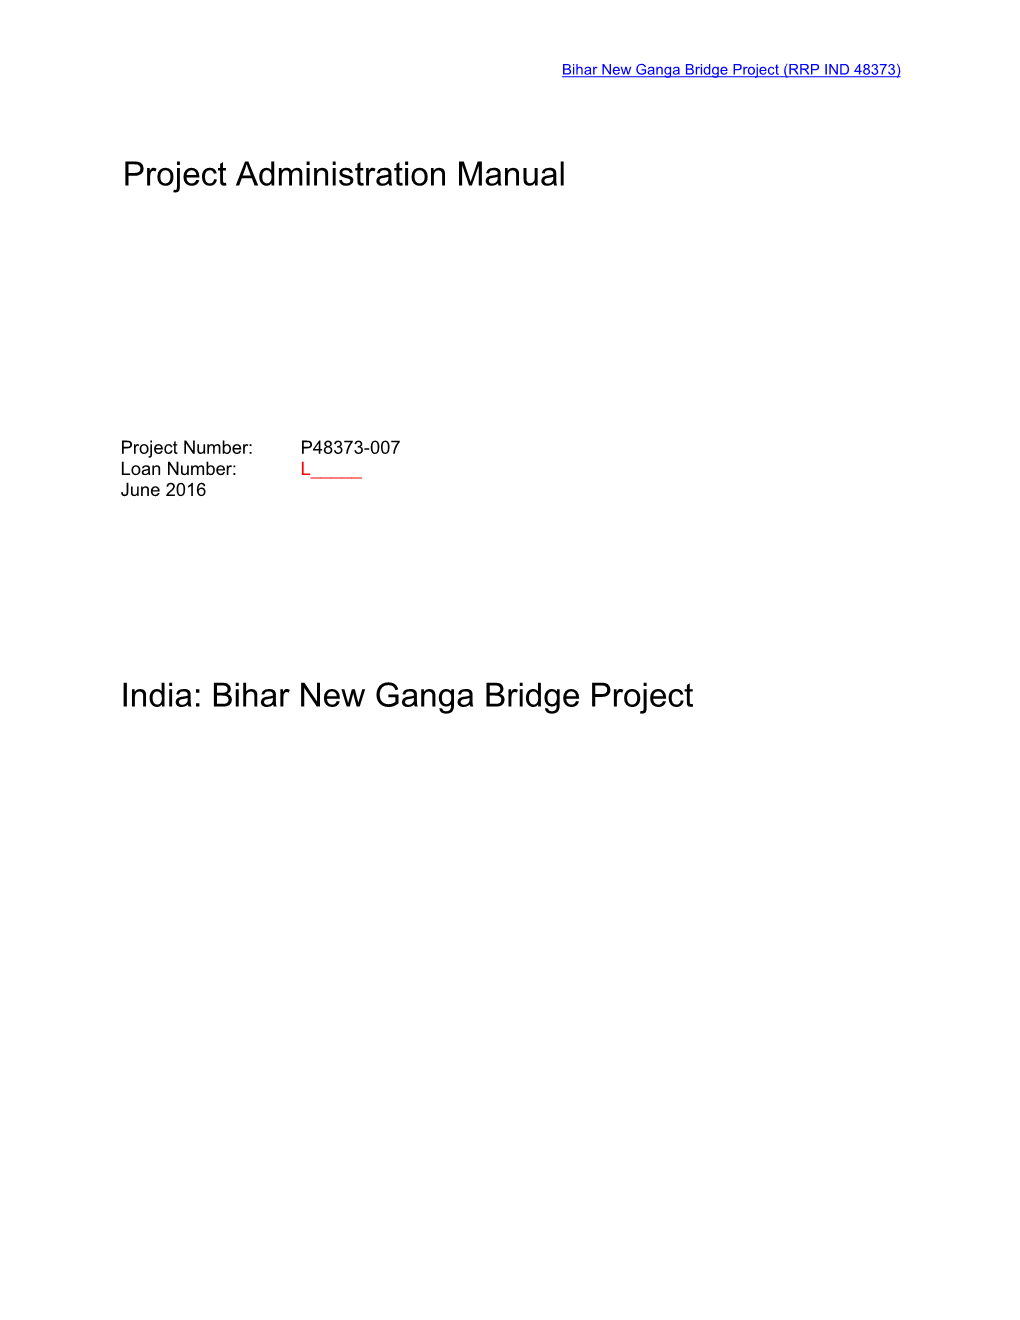 Bihar New Ganga Bridge Project Project